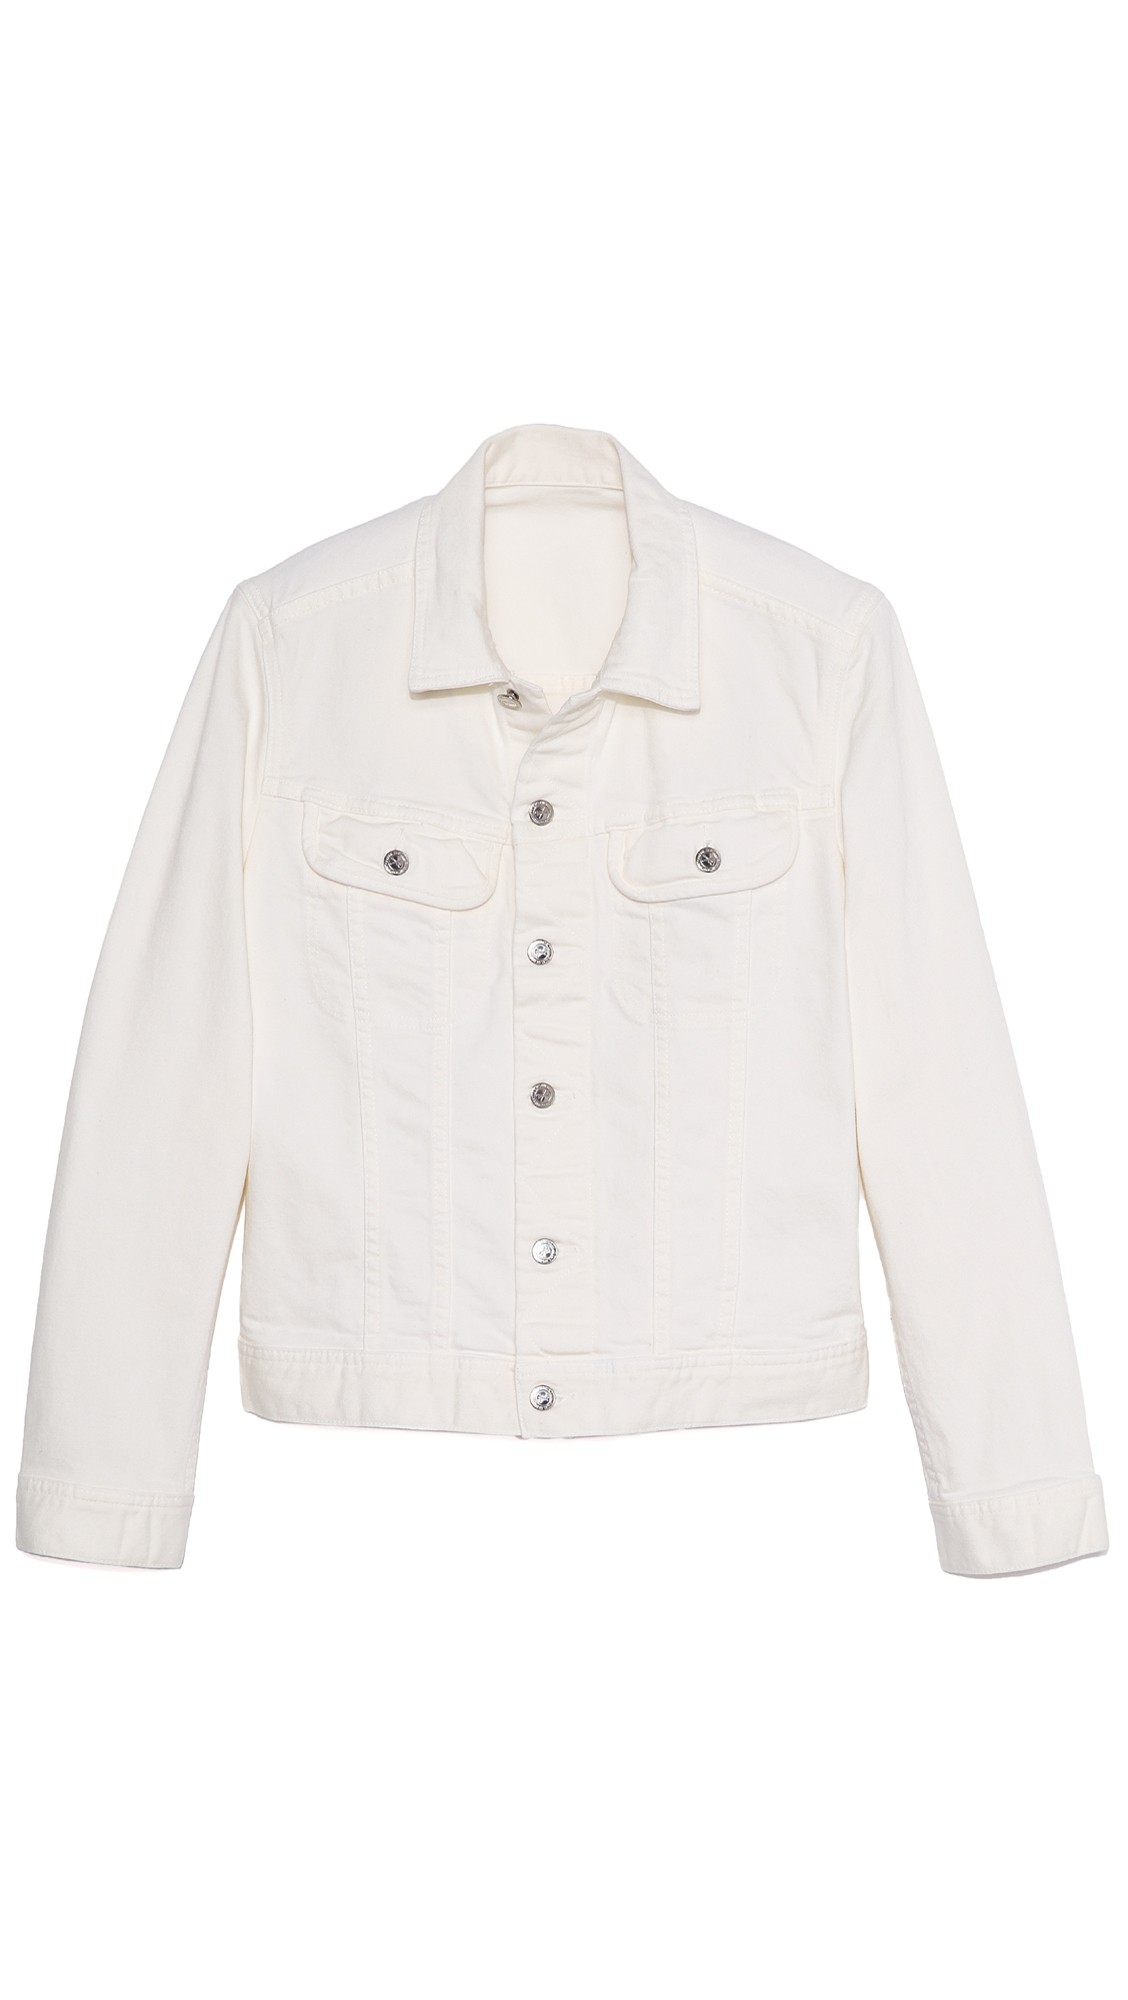 Lyst - A.p.c. White Denim Jean Jacket in White for Men